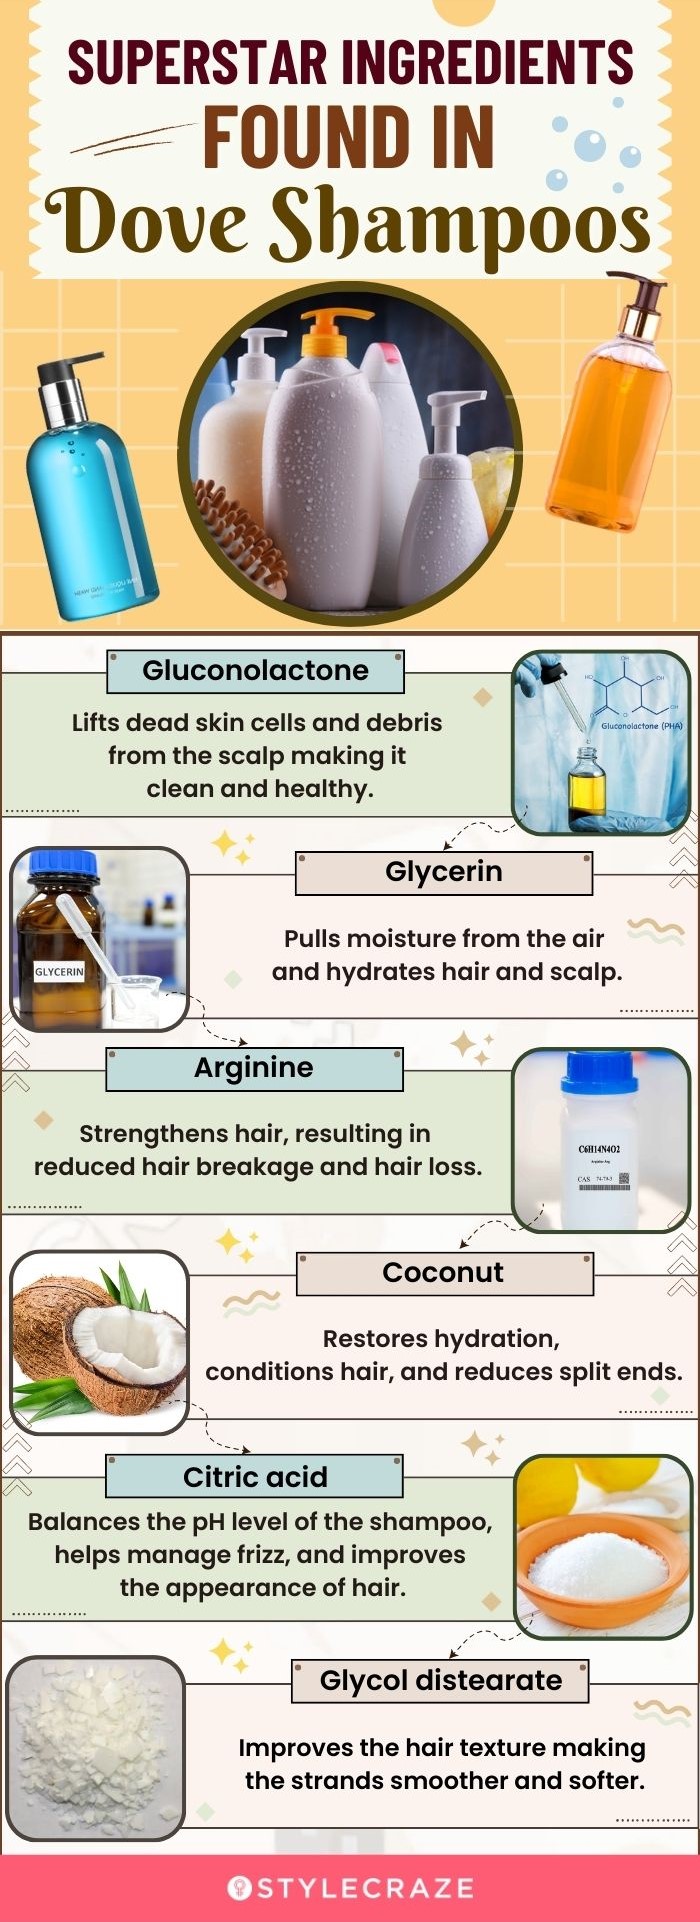 Superstar Ingredients Found In Dove Shampoos (infographic)